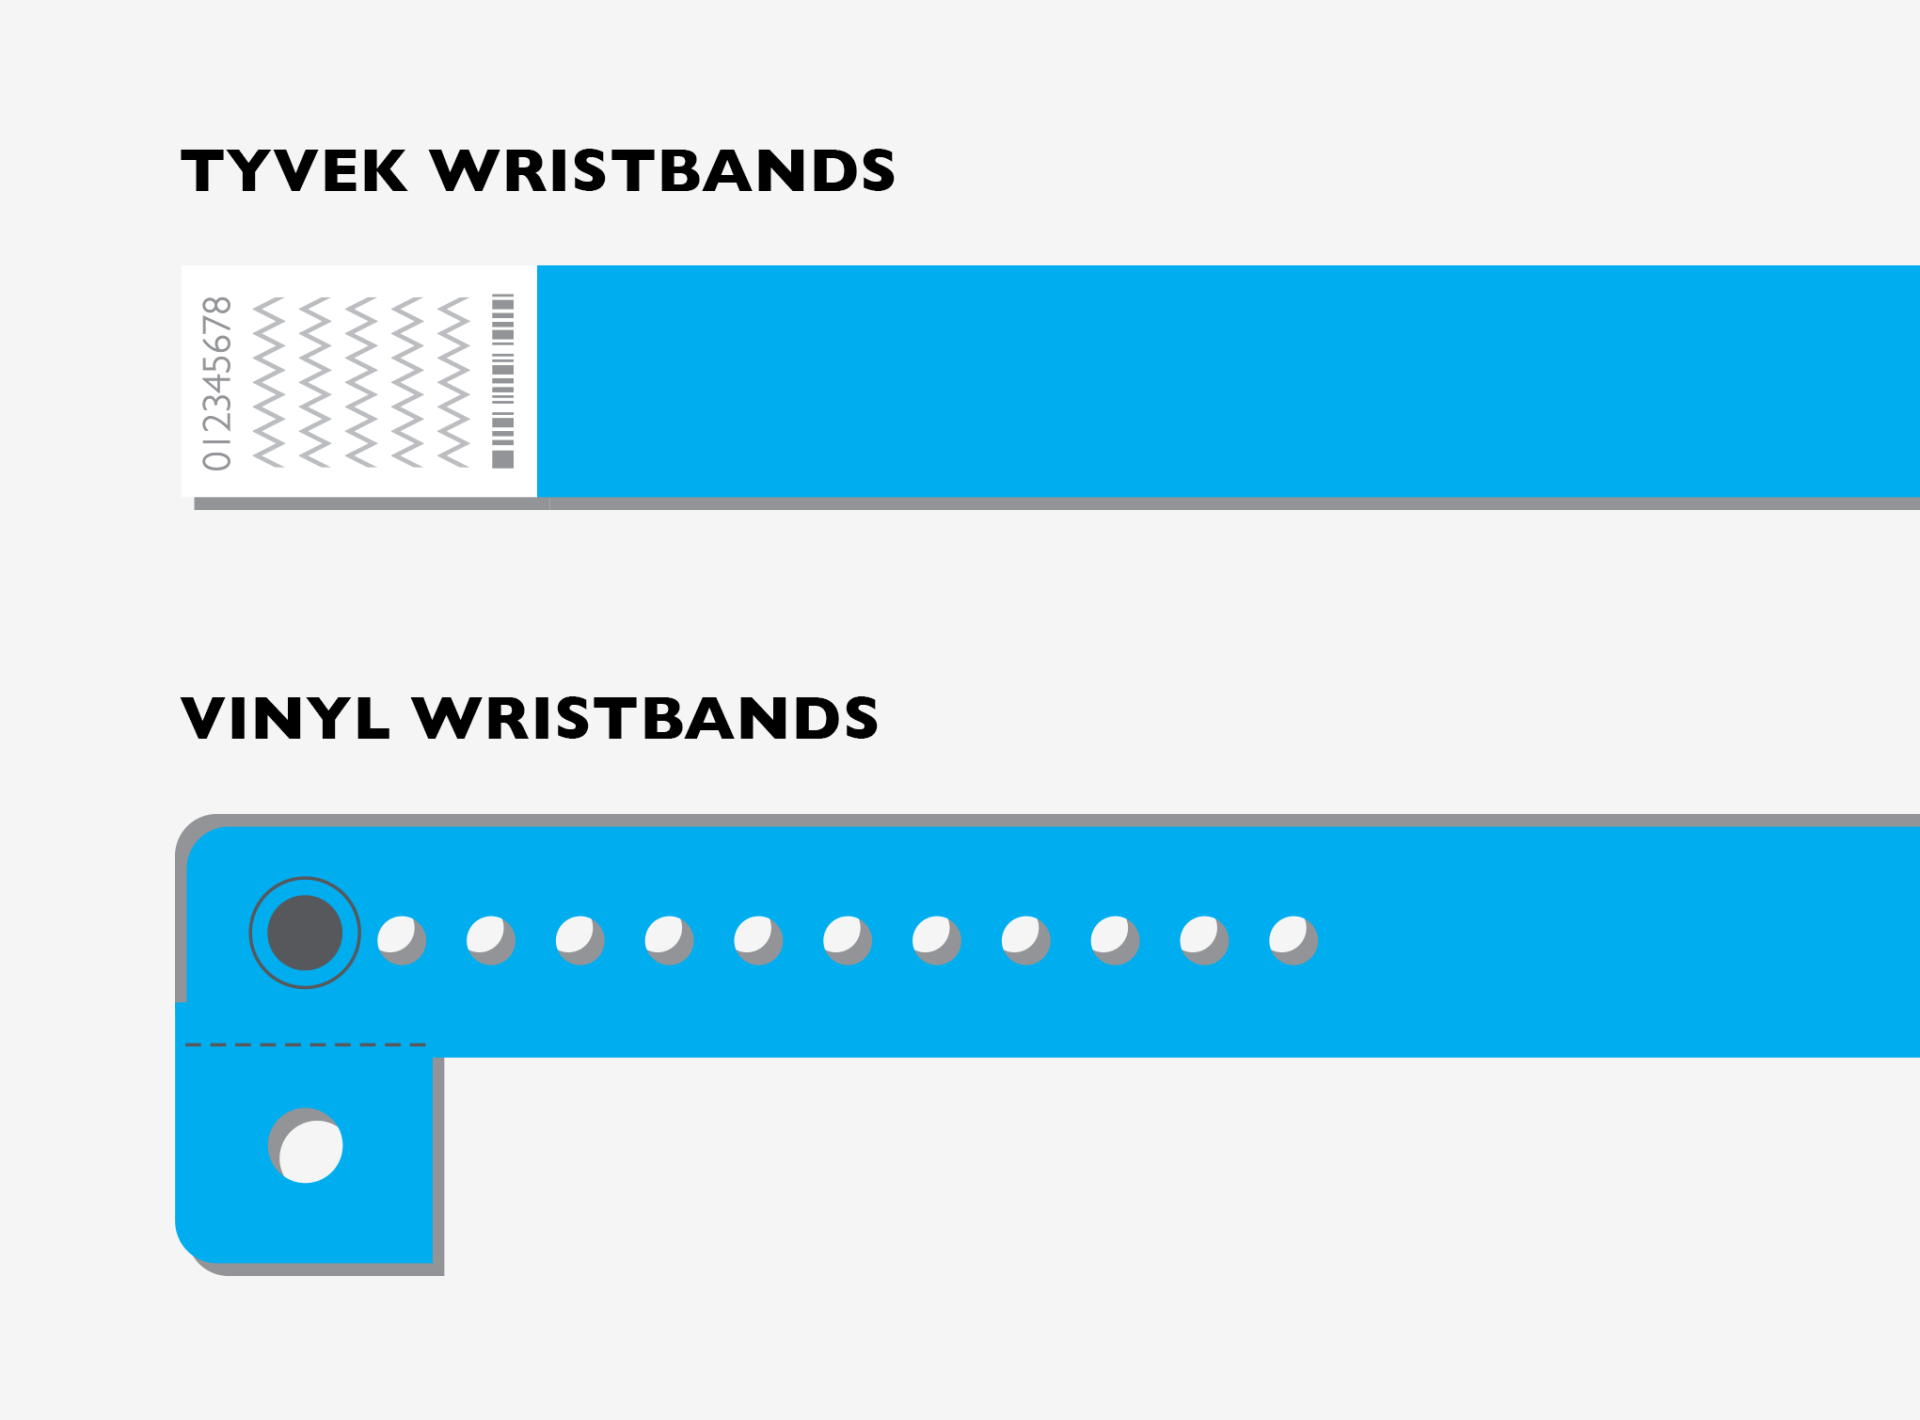 Wristband Printing Guide